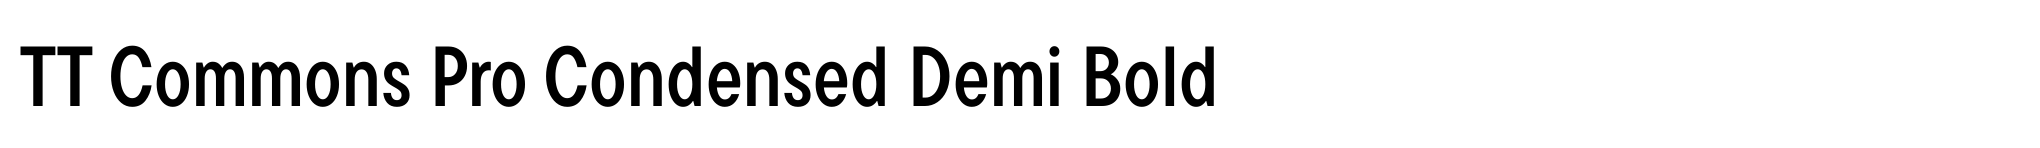 TT Commons Pro Condensed Demi Bold image